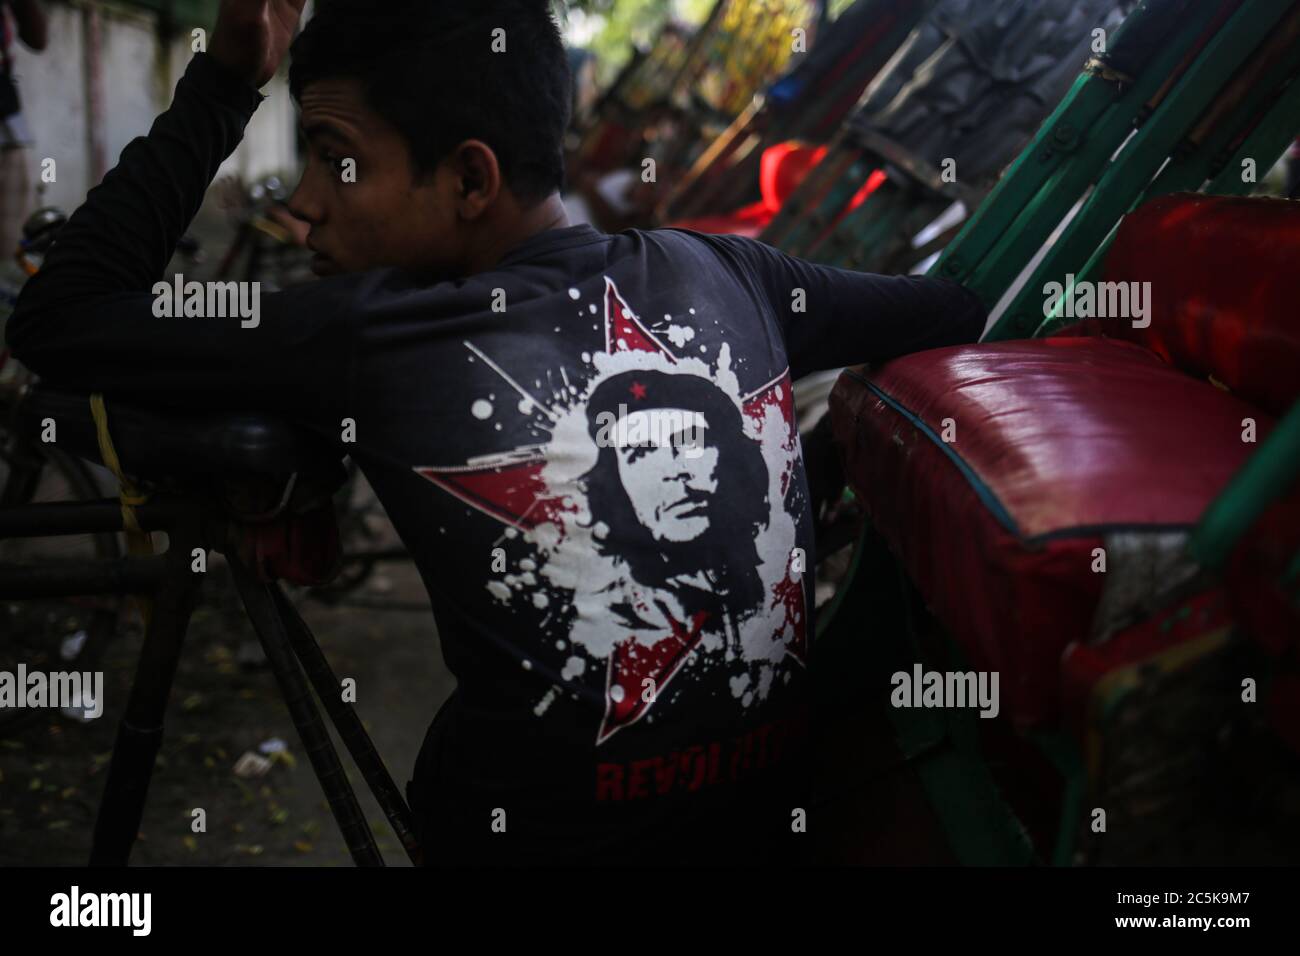 Dhaka, Dhaka, Bangladesh. 3rd July, 2020. A man is sitting on his ride wearing Che Guevara t-shirt. Credit: Md. Rakibul Hasan/ZUMA Wire/Alamy Live News Stock Photo